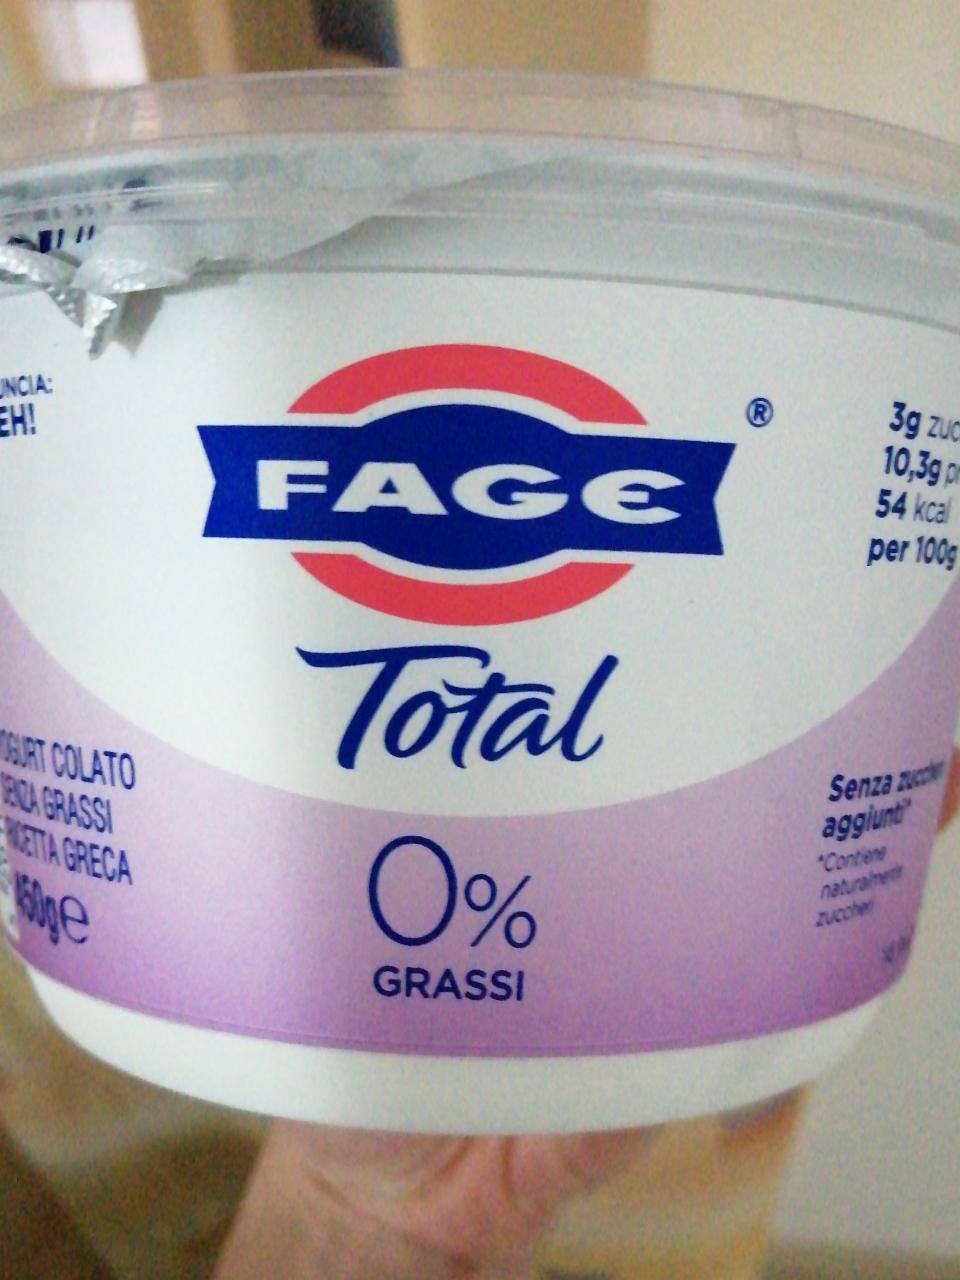 Fotografie - Fage Total 0% grassi